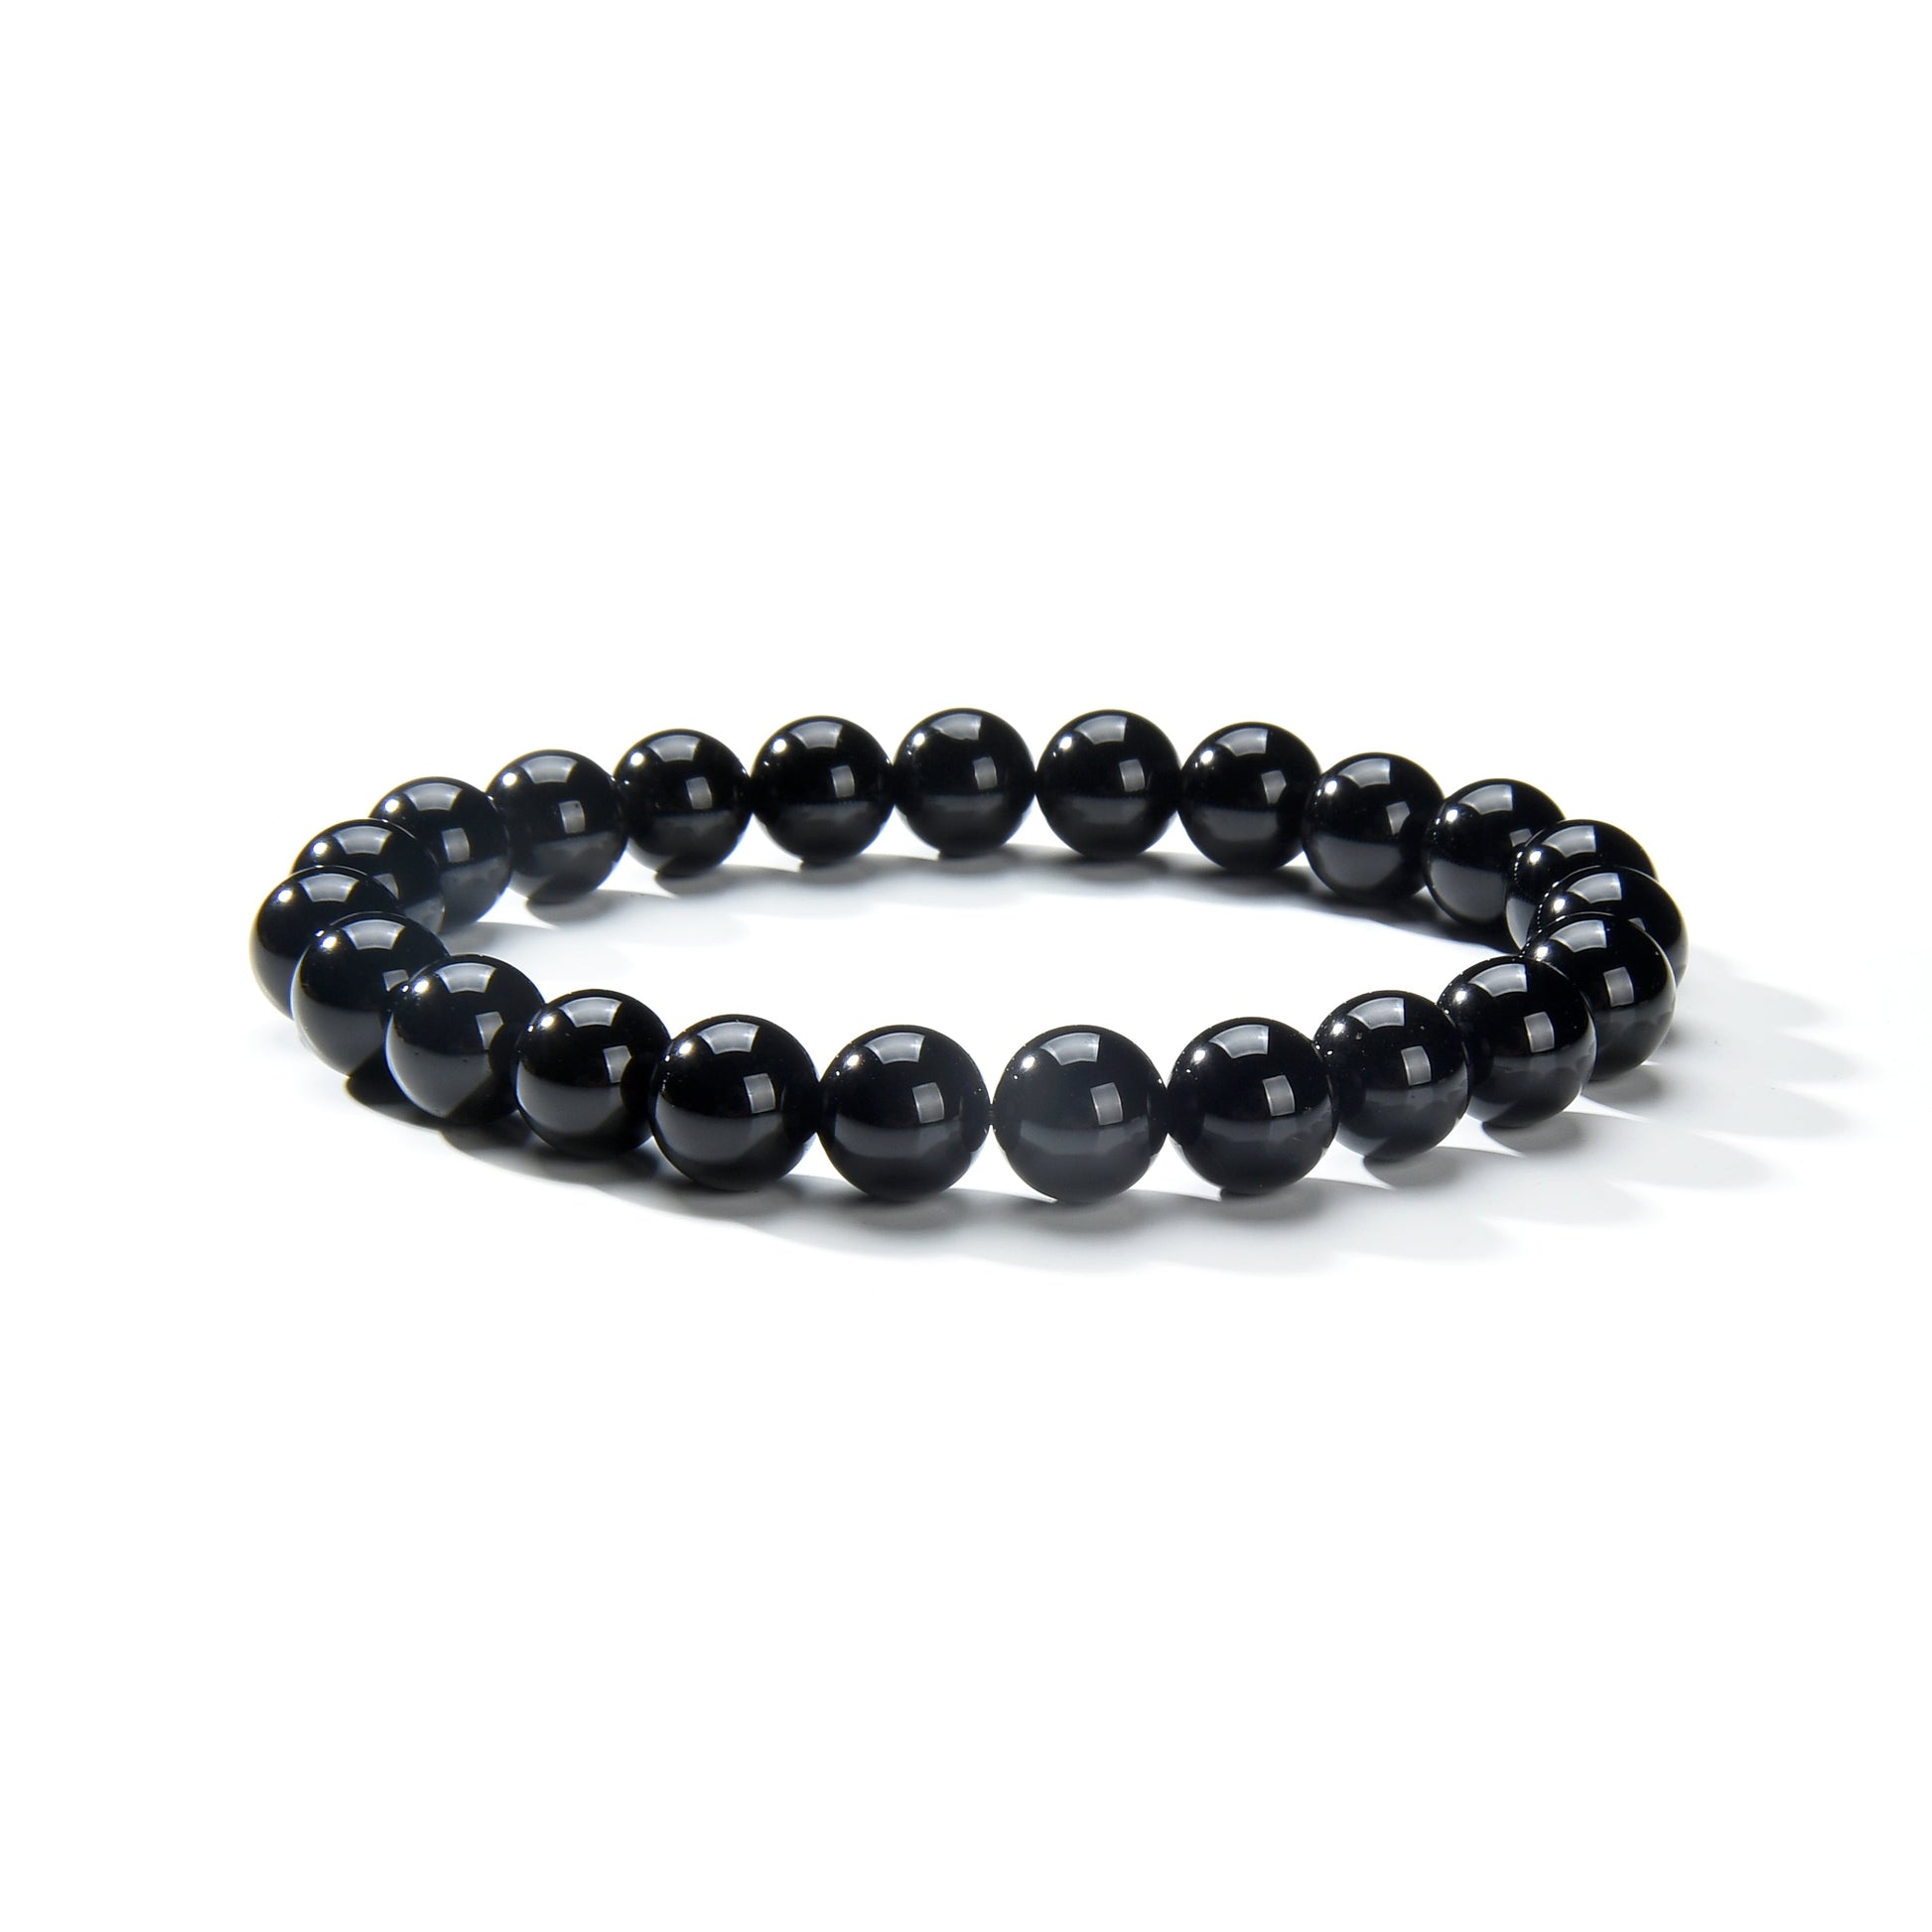 Black Agate Round Beads Bracelet 8mm